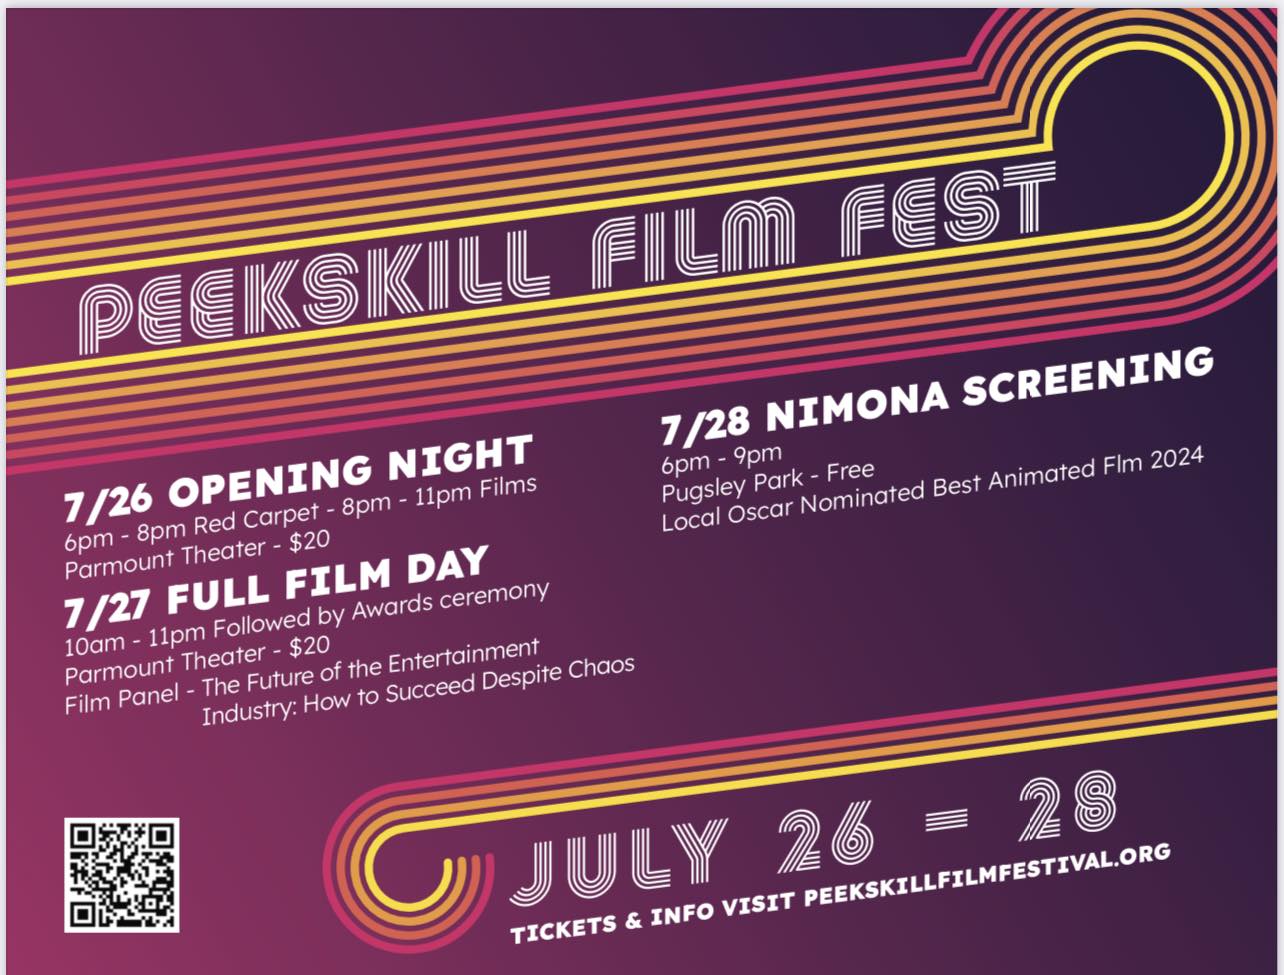 The Peekskill Film Festival